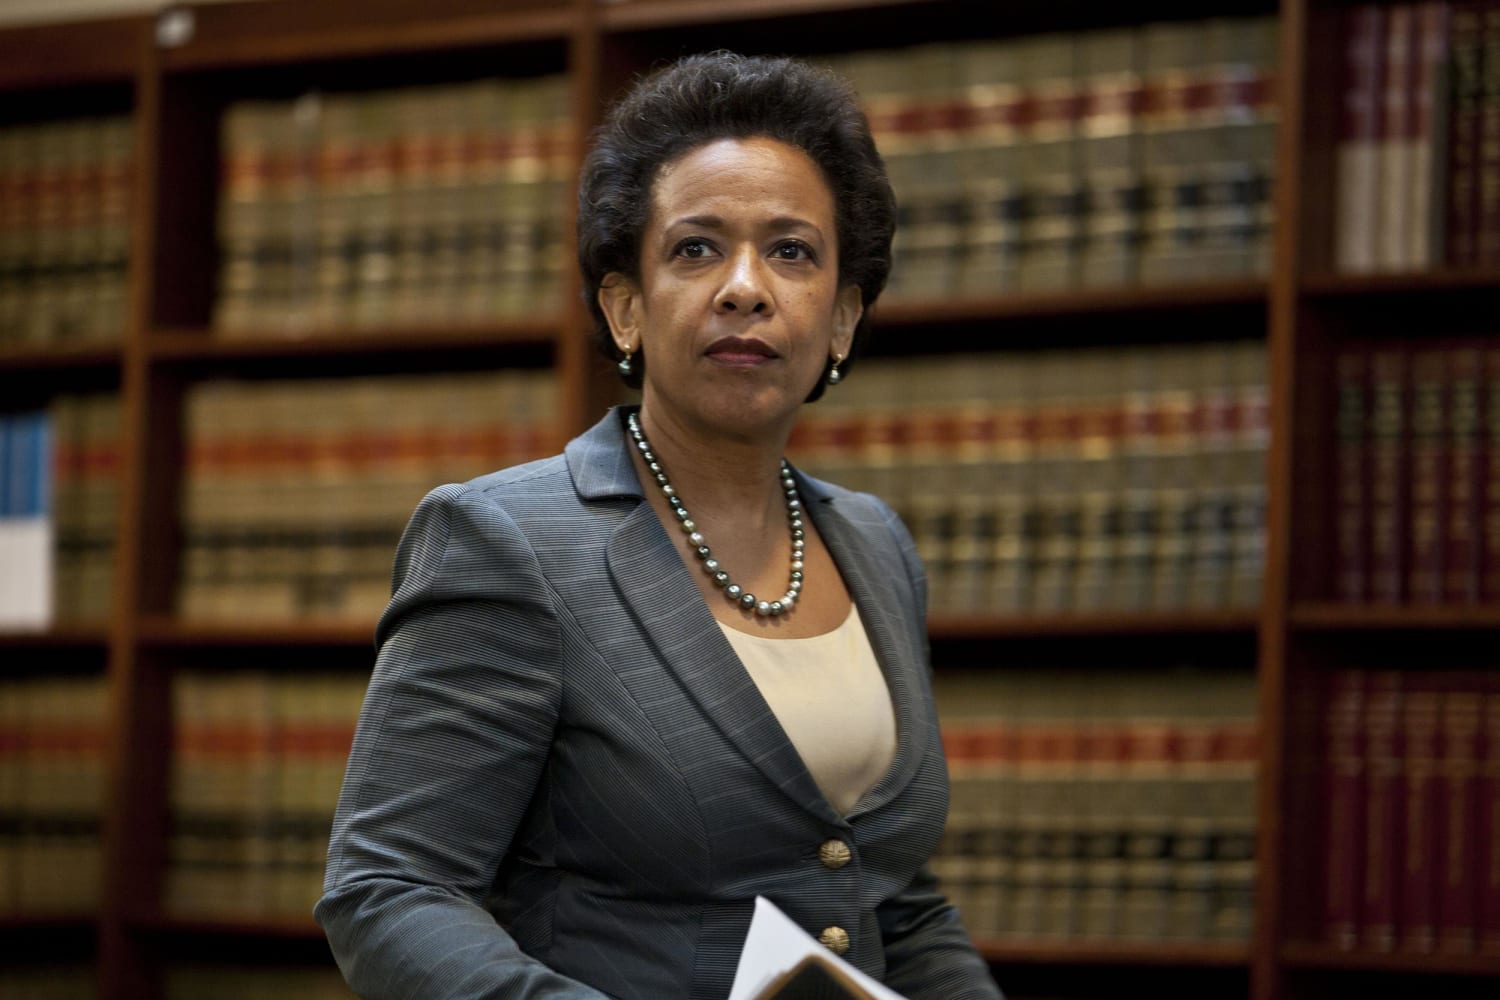 Obama Nominates LORETTA LYNCH for Attorney General - NBC News.com